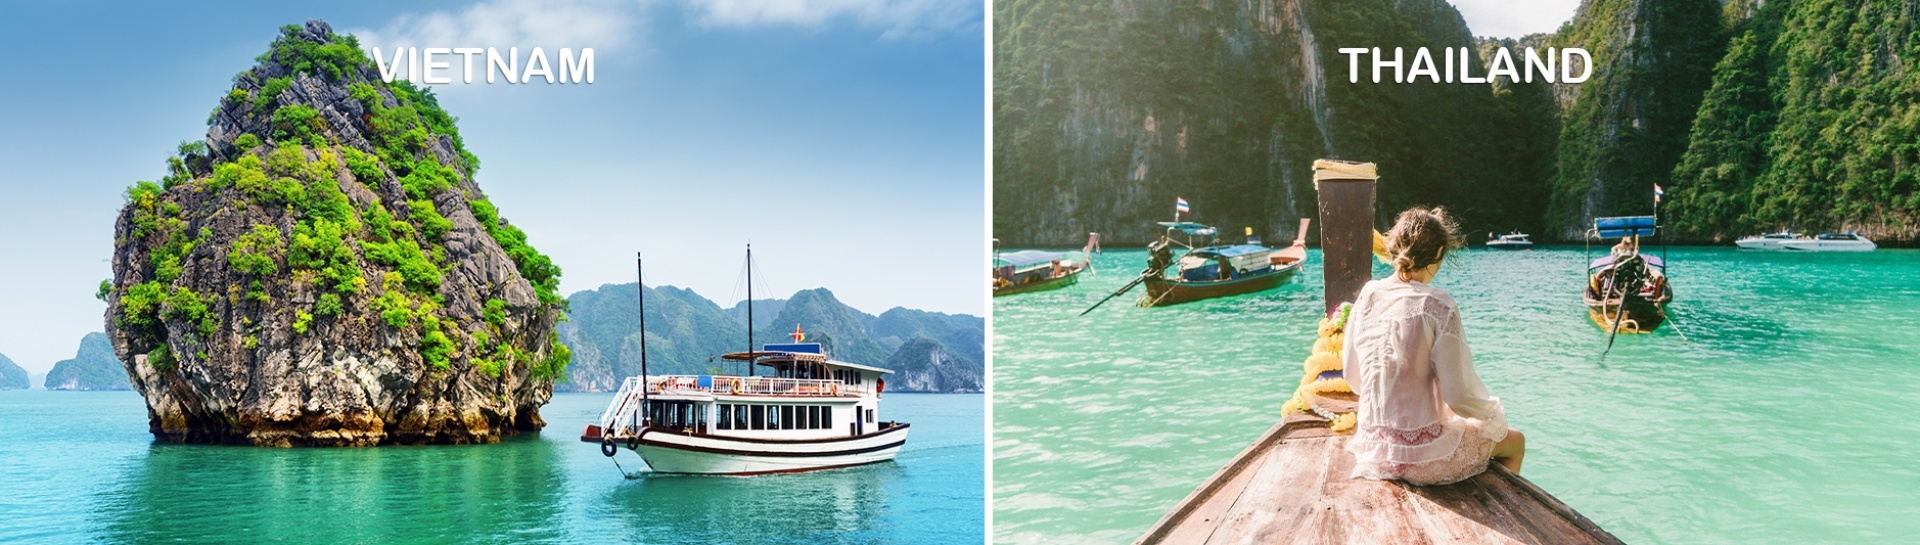 Vietnam and Thailand Tours